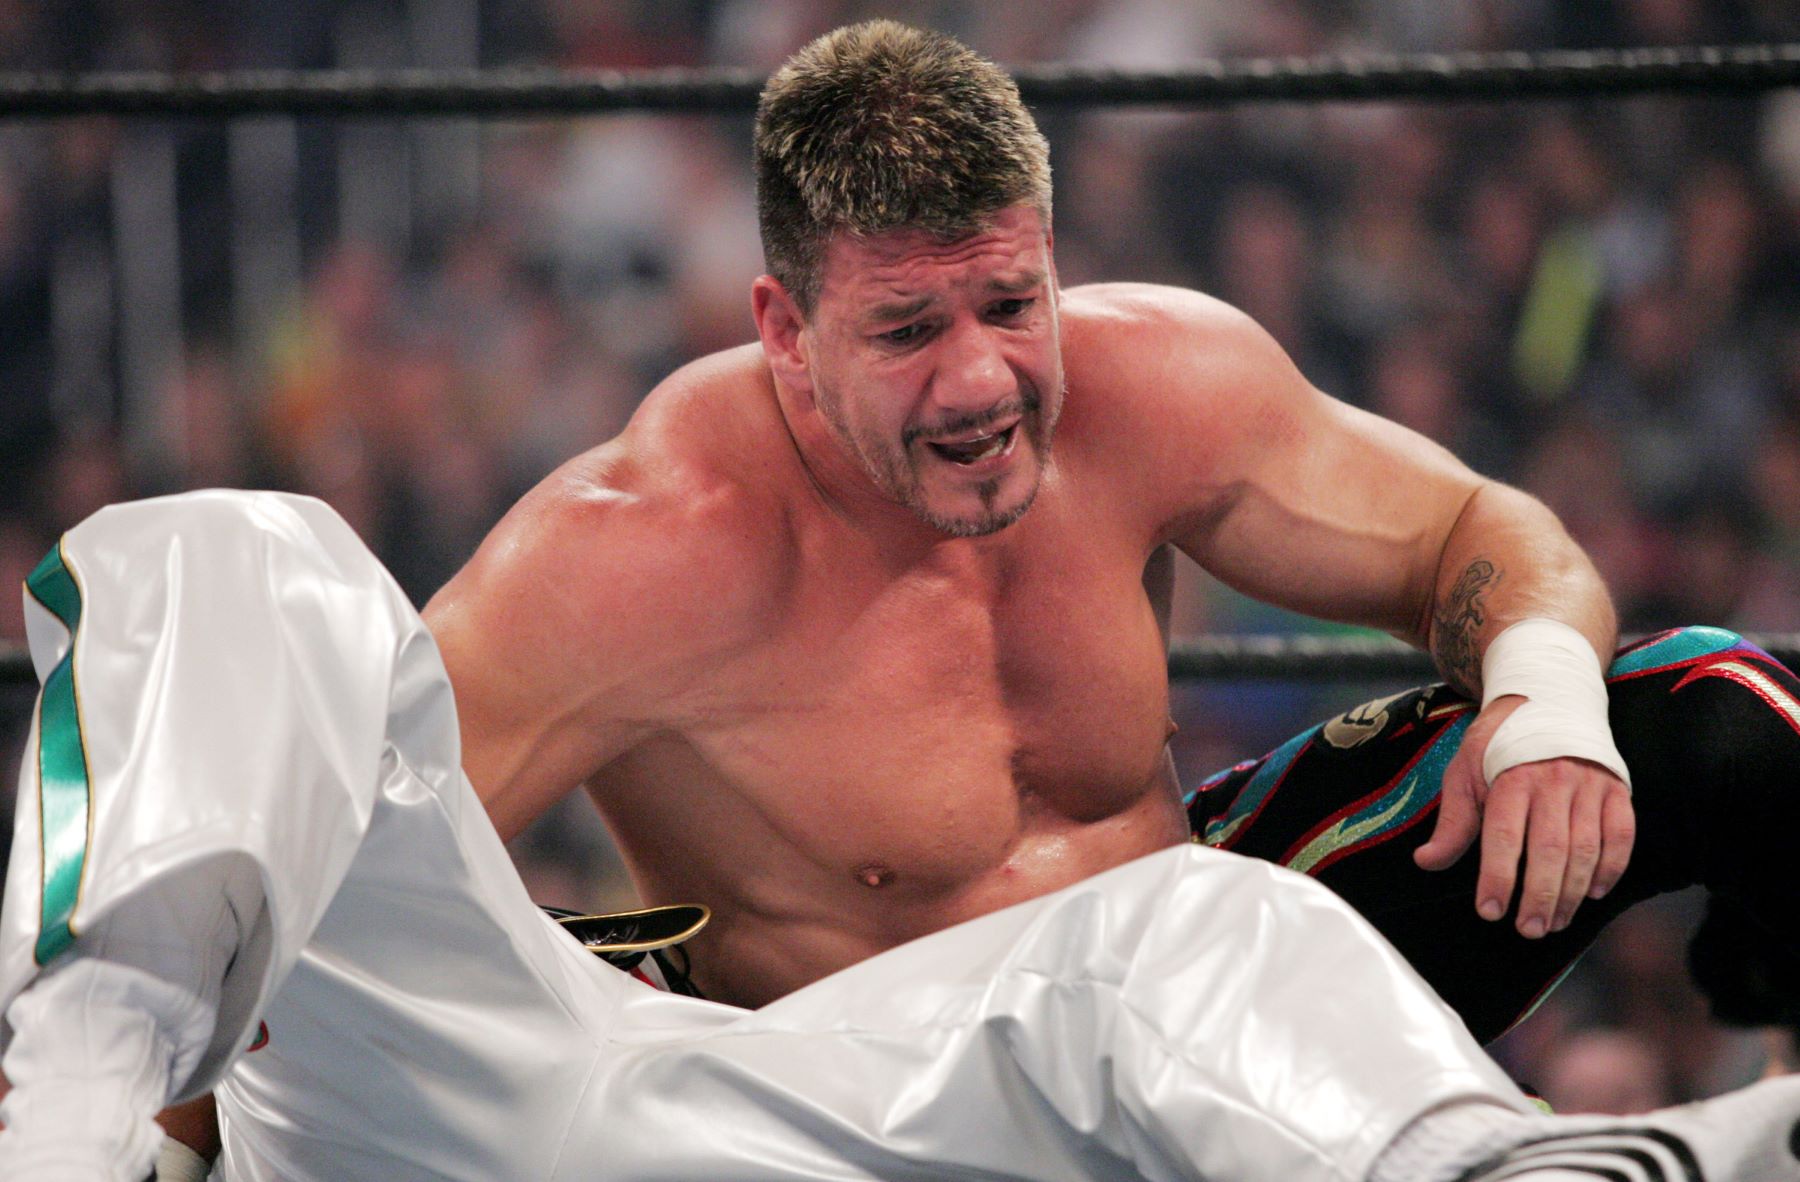 Eddie Guerrero's professional wrestling debut